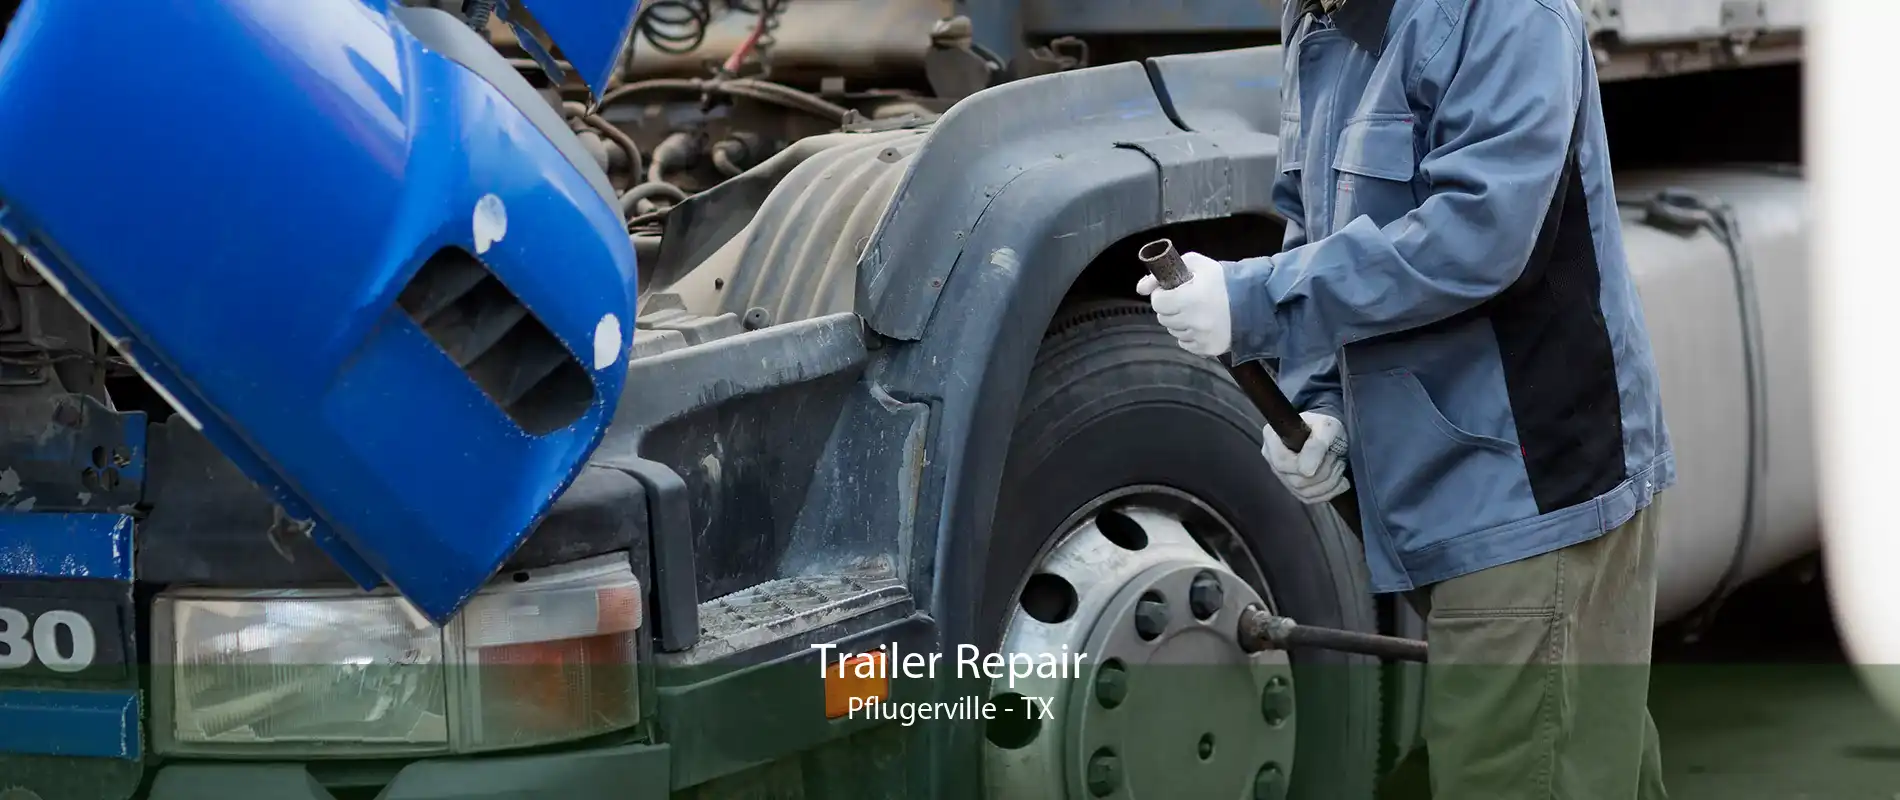 Trailer Repair Pflugerville - TX